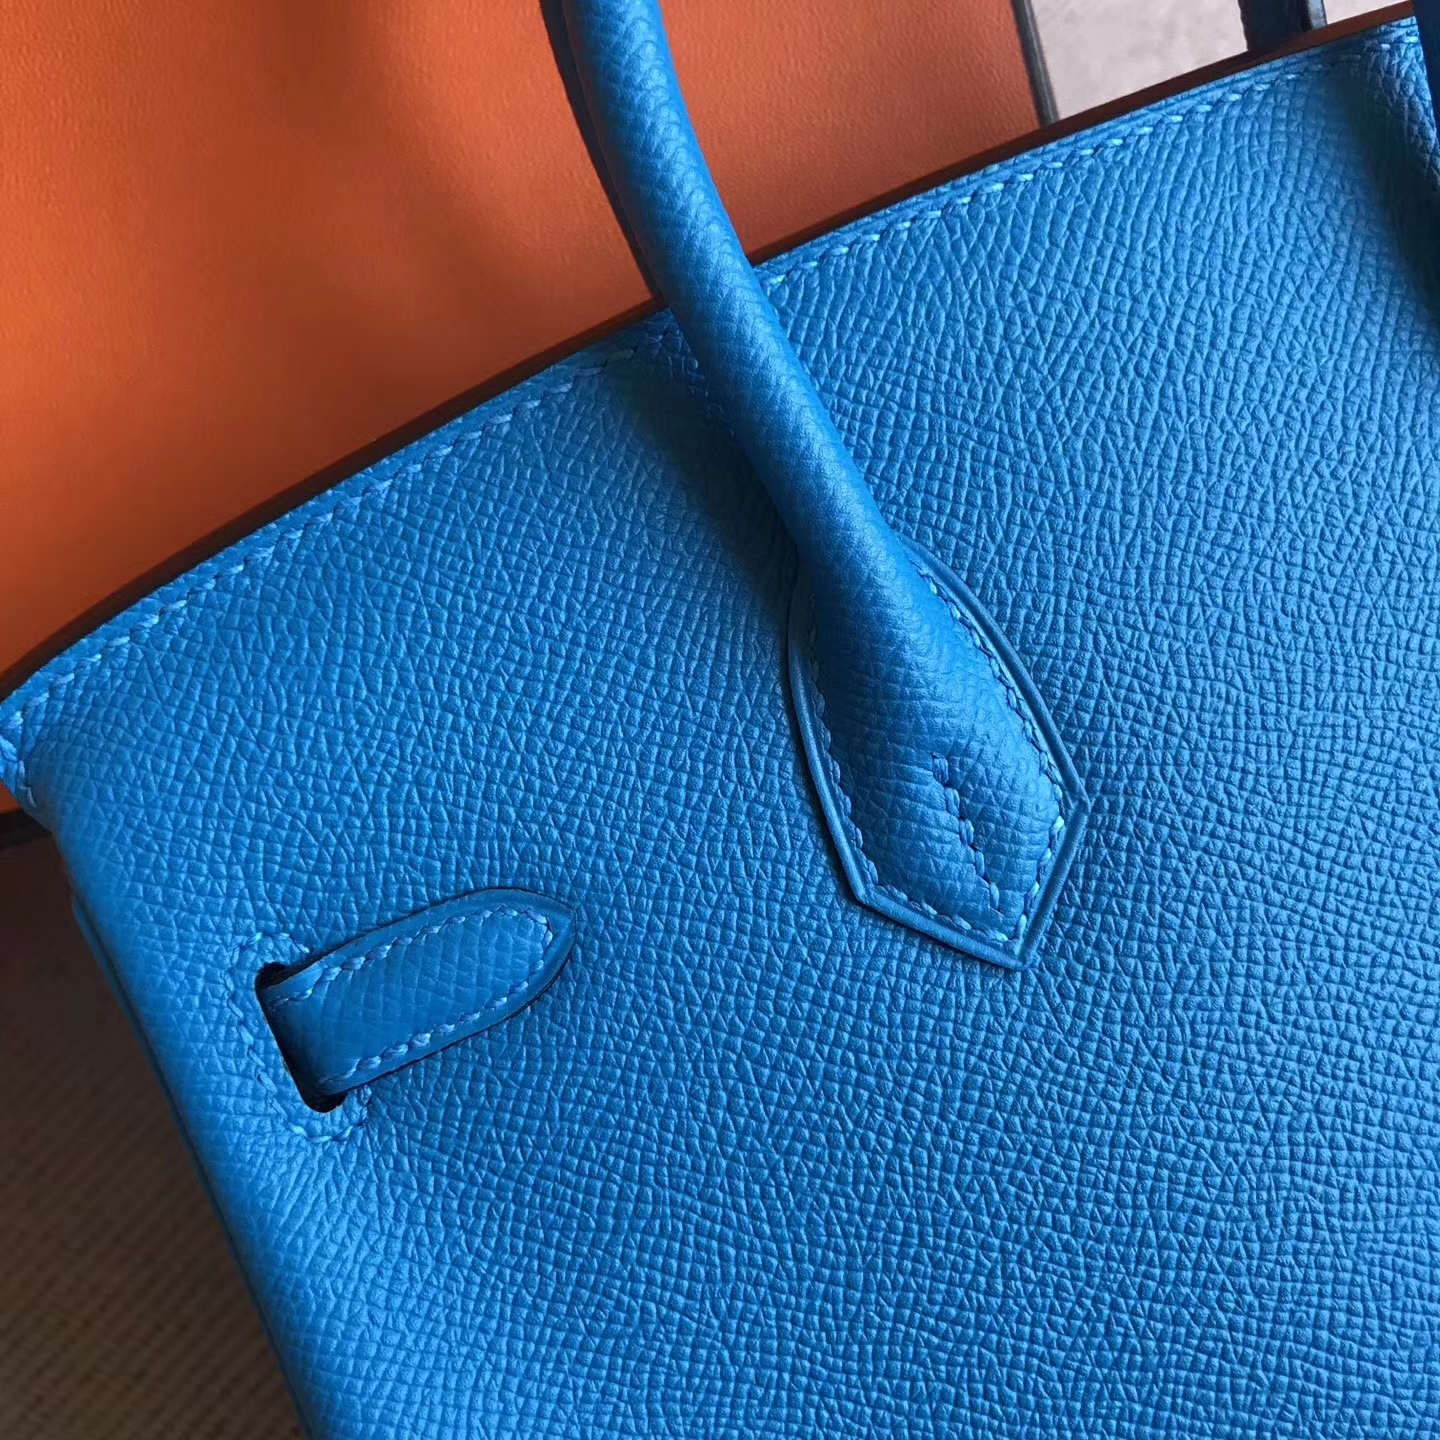 On Sale Hermes Birkin25cm Tote Bag in B3 Blue Zanzibar Epsom Leather